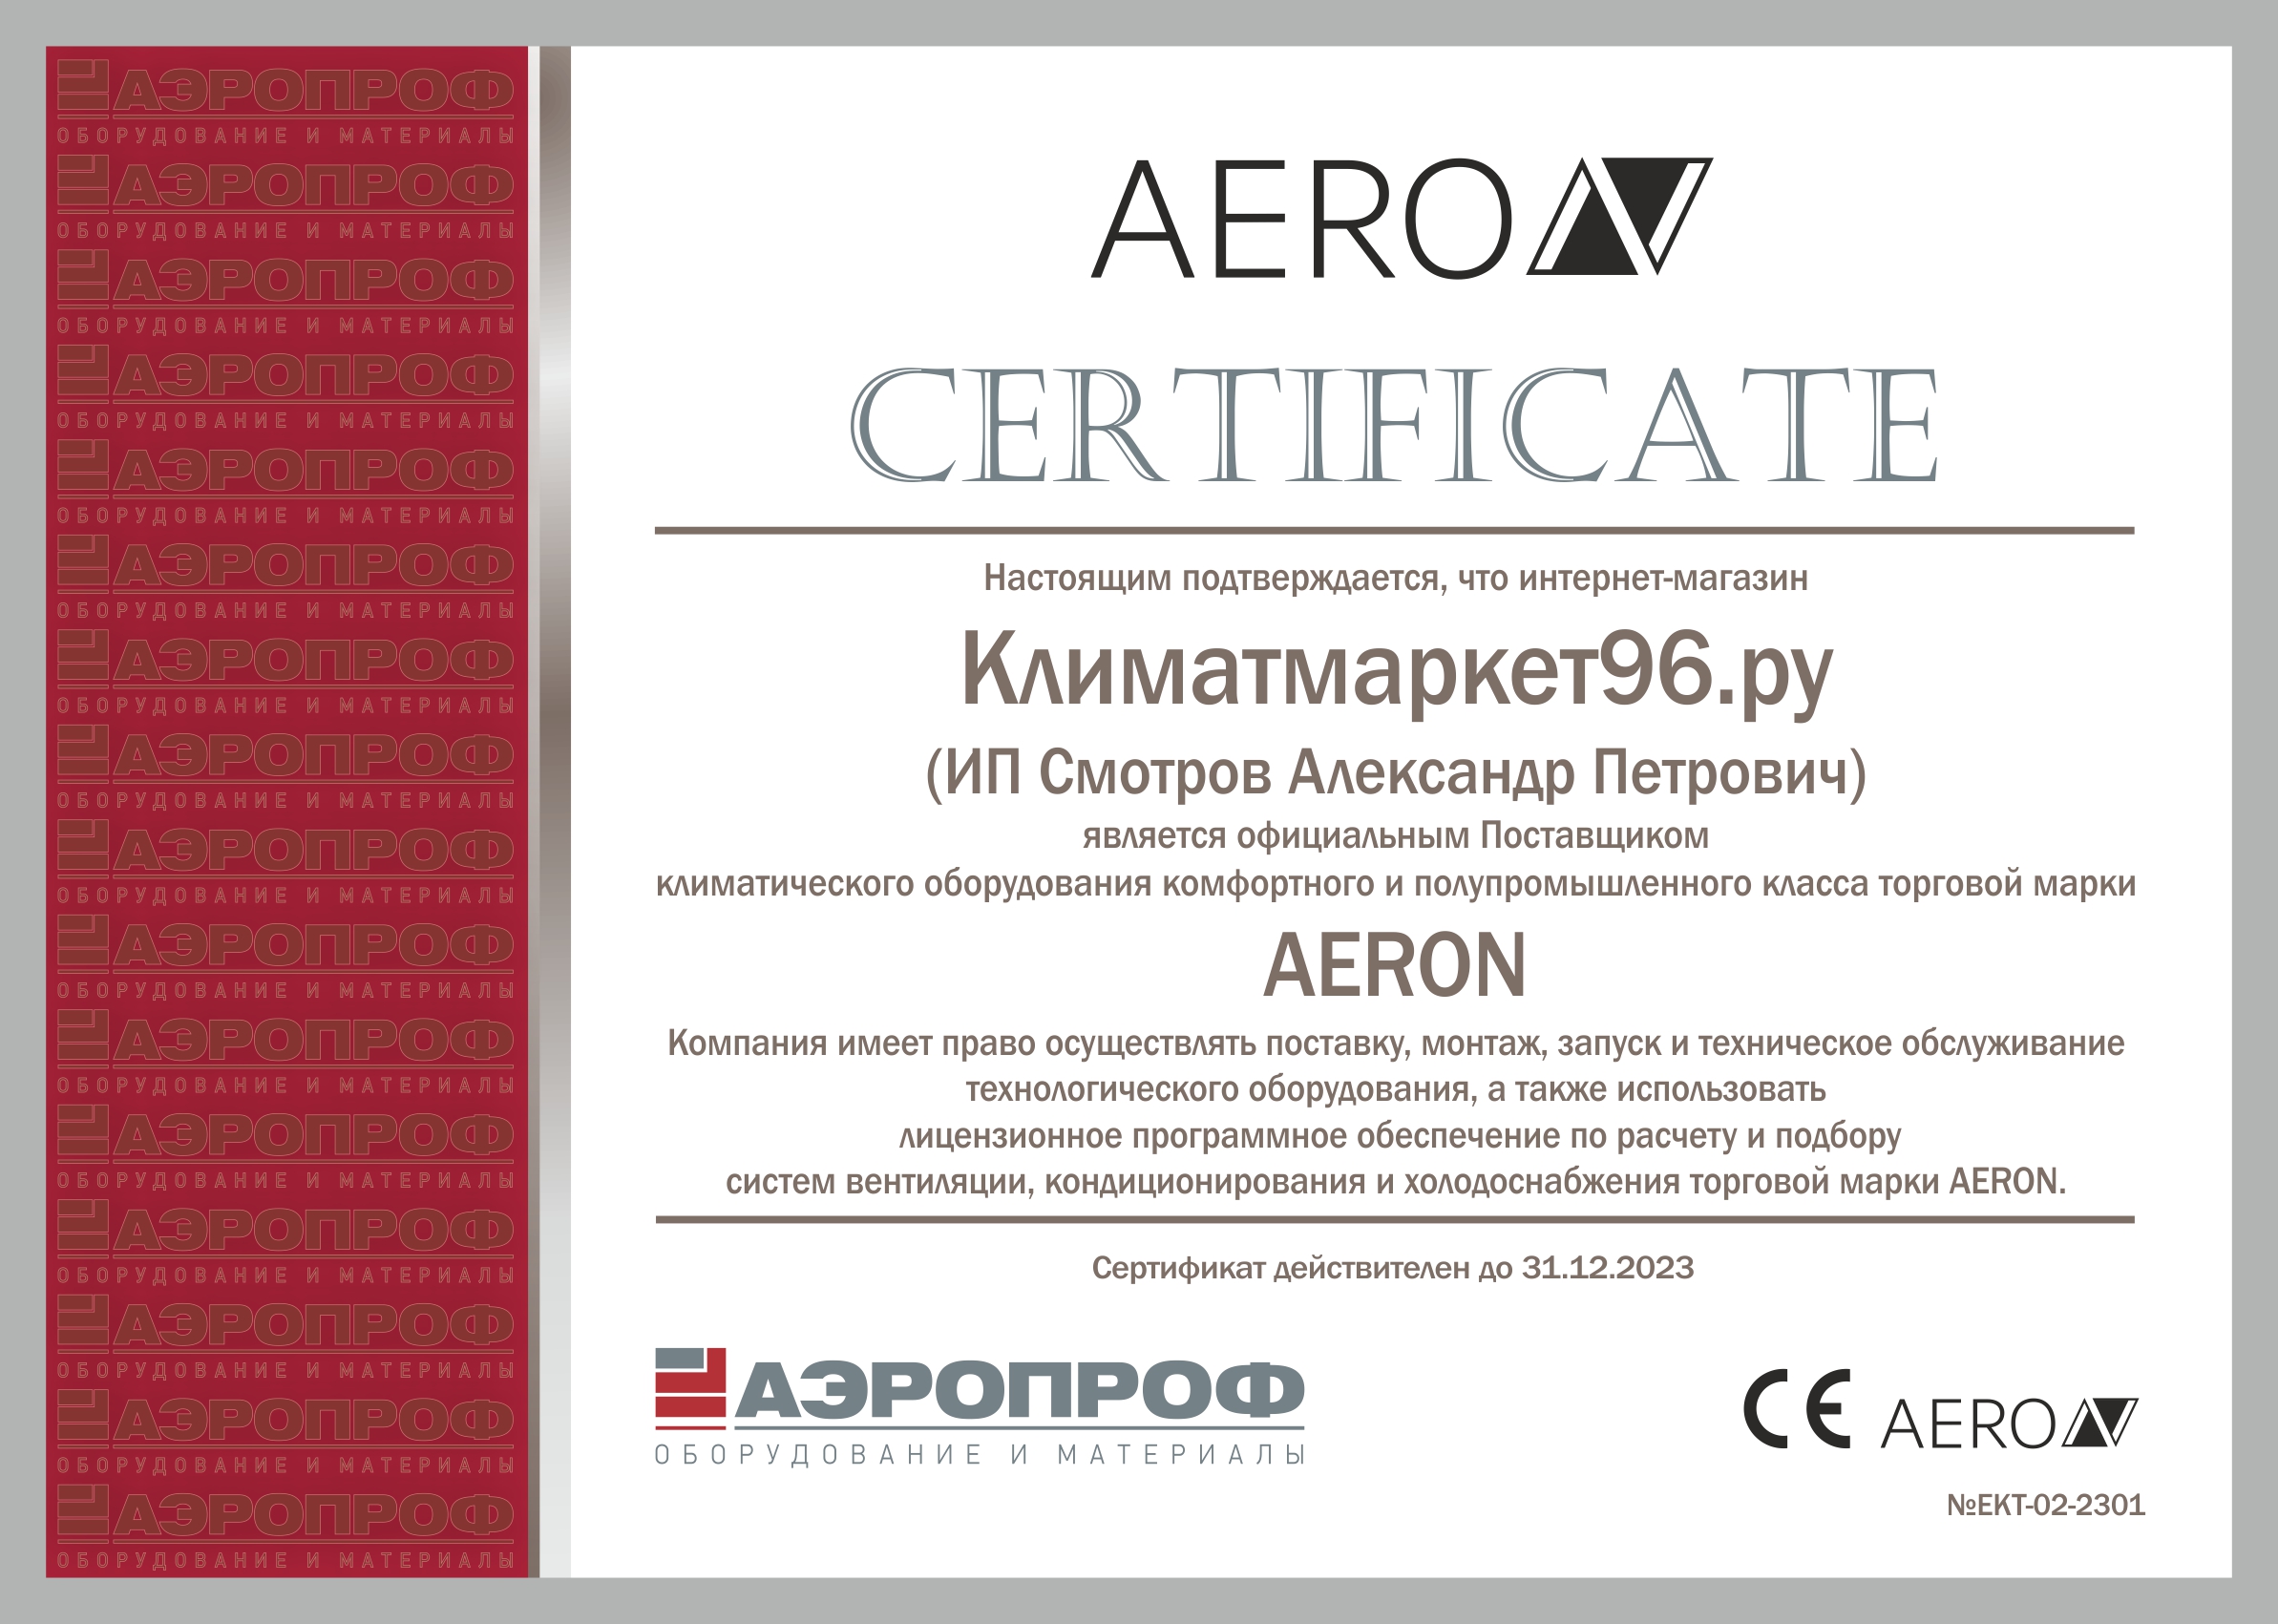 sert23-km96-aeron Kondicioner Aero ALRS-07IH3A-02/ALRS-07OH3A-02 kypit v Ekaterinbyrge v internet-magazine KlimatMarket96.ry Сертификат официального дилера